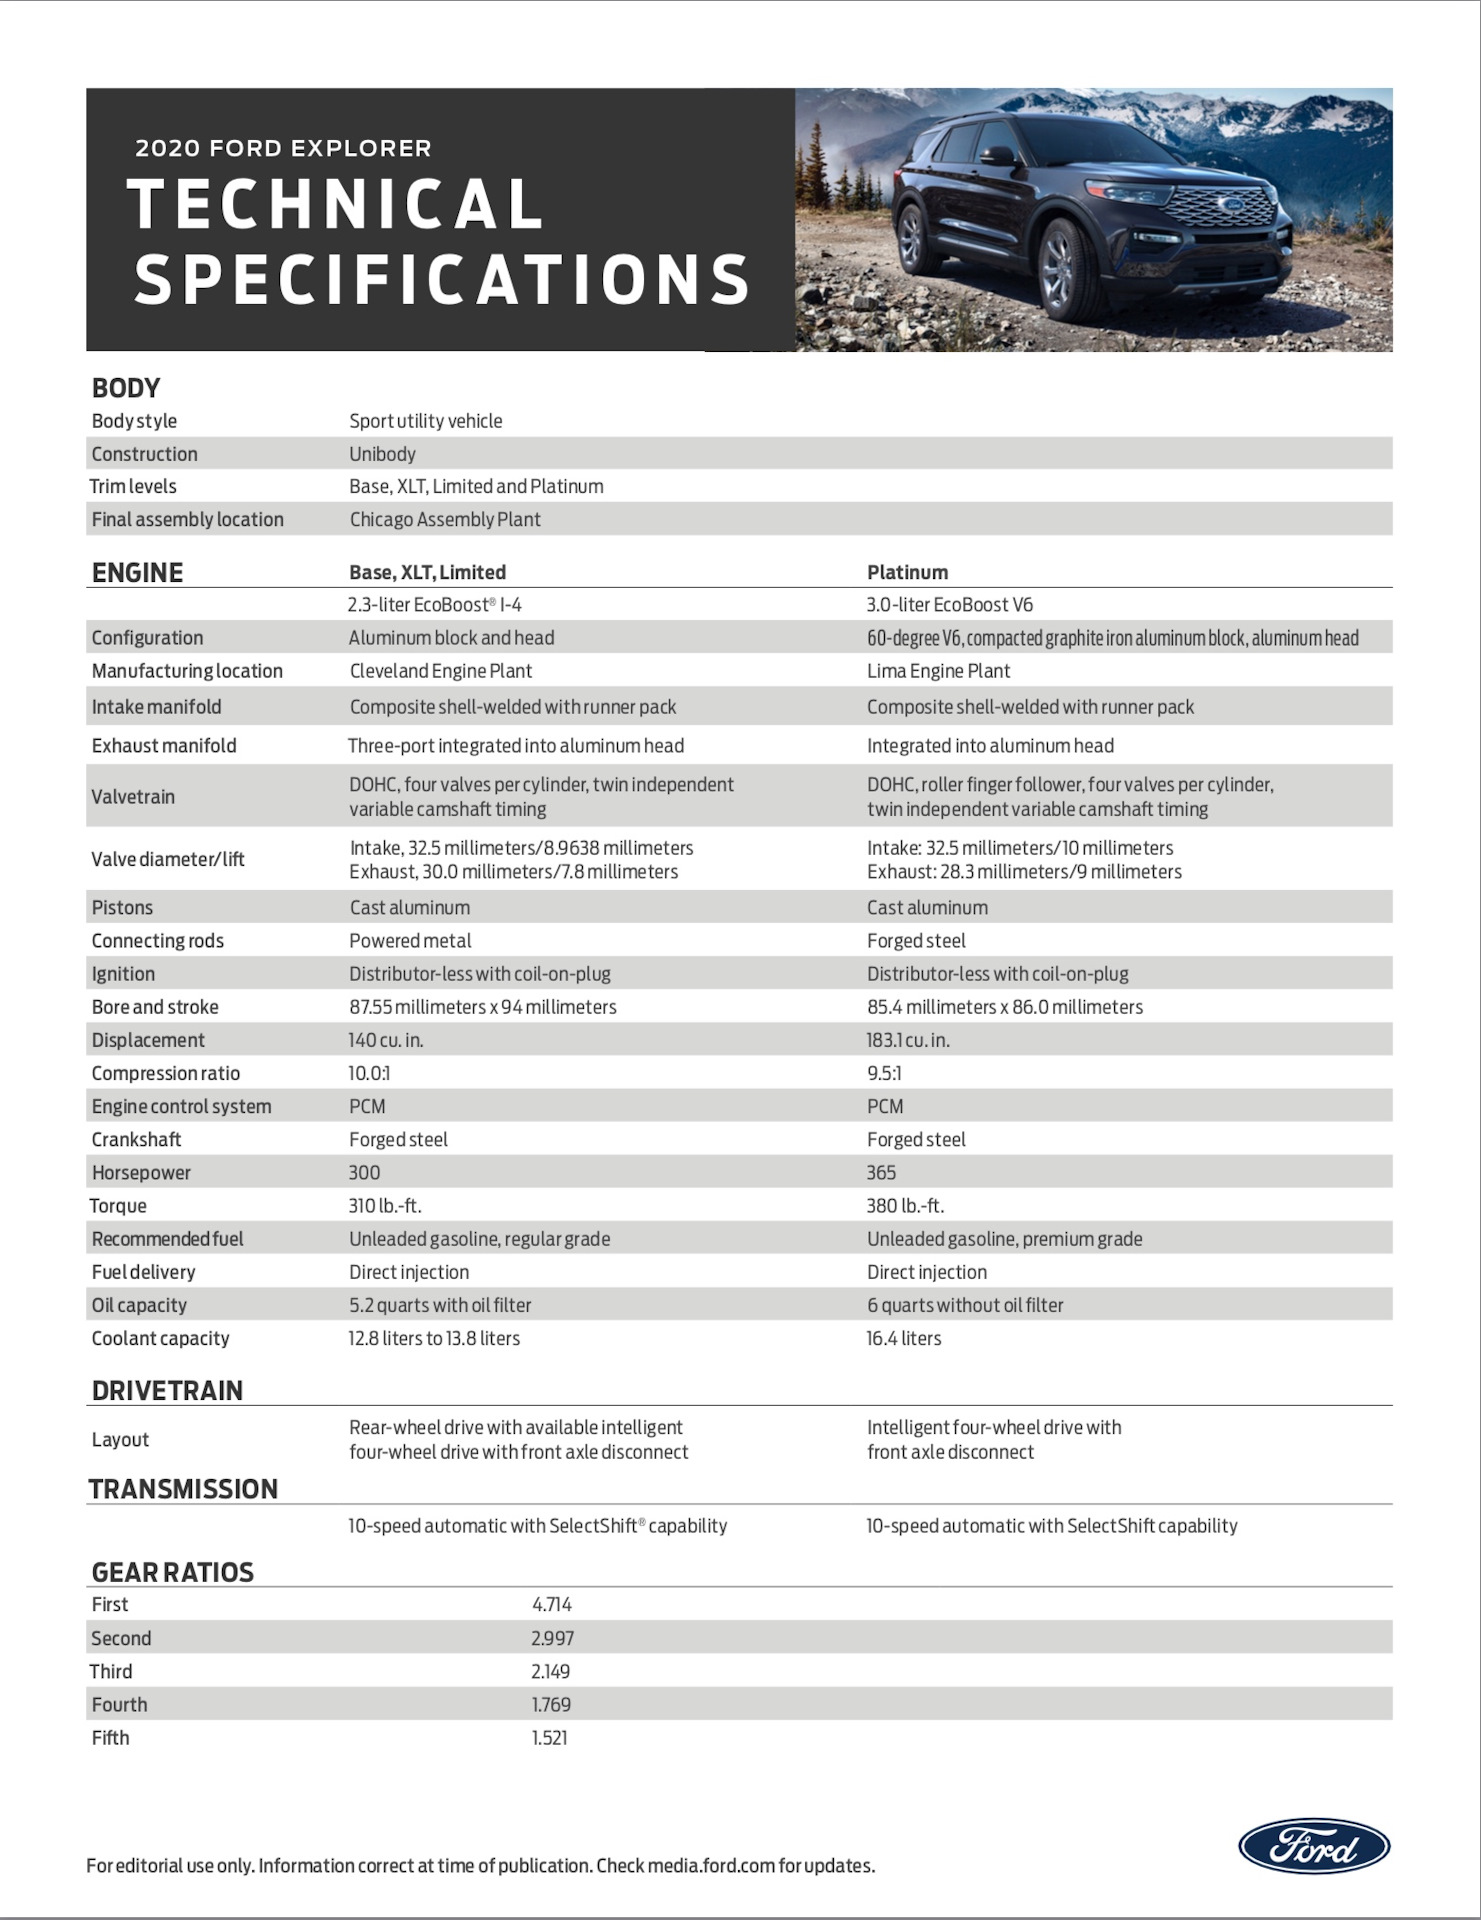 Форд технический характеристика. Форд эксплорер 2020 характеристики технические.